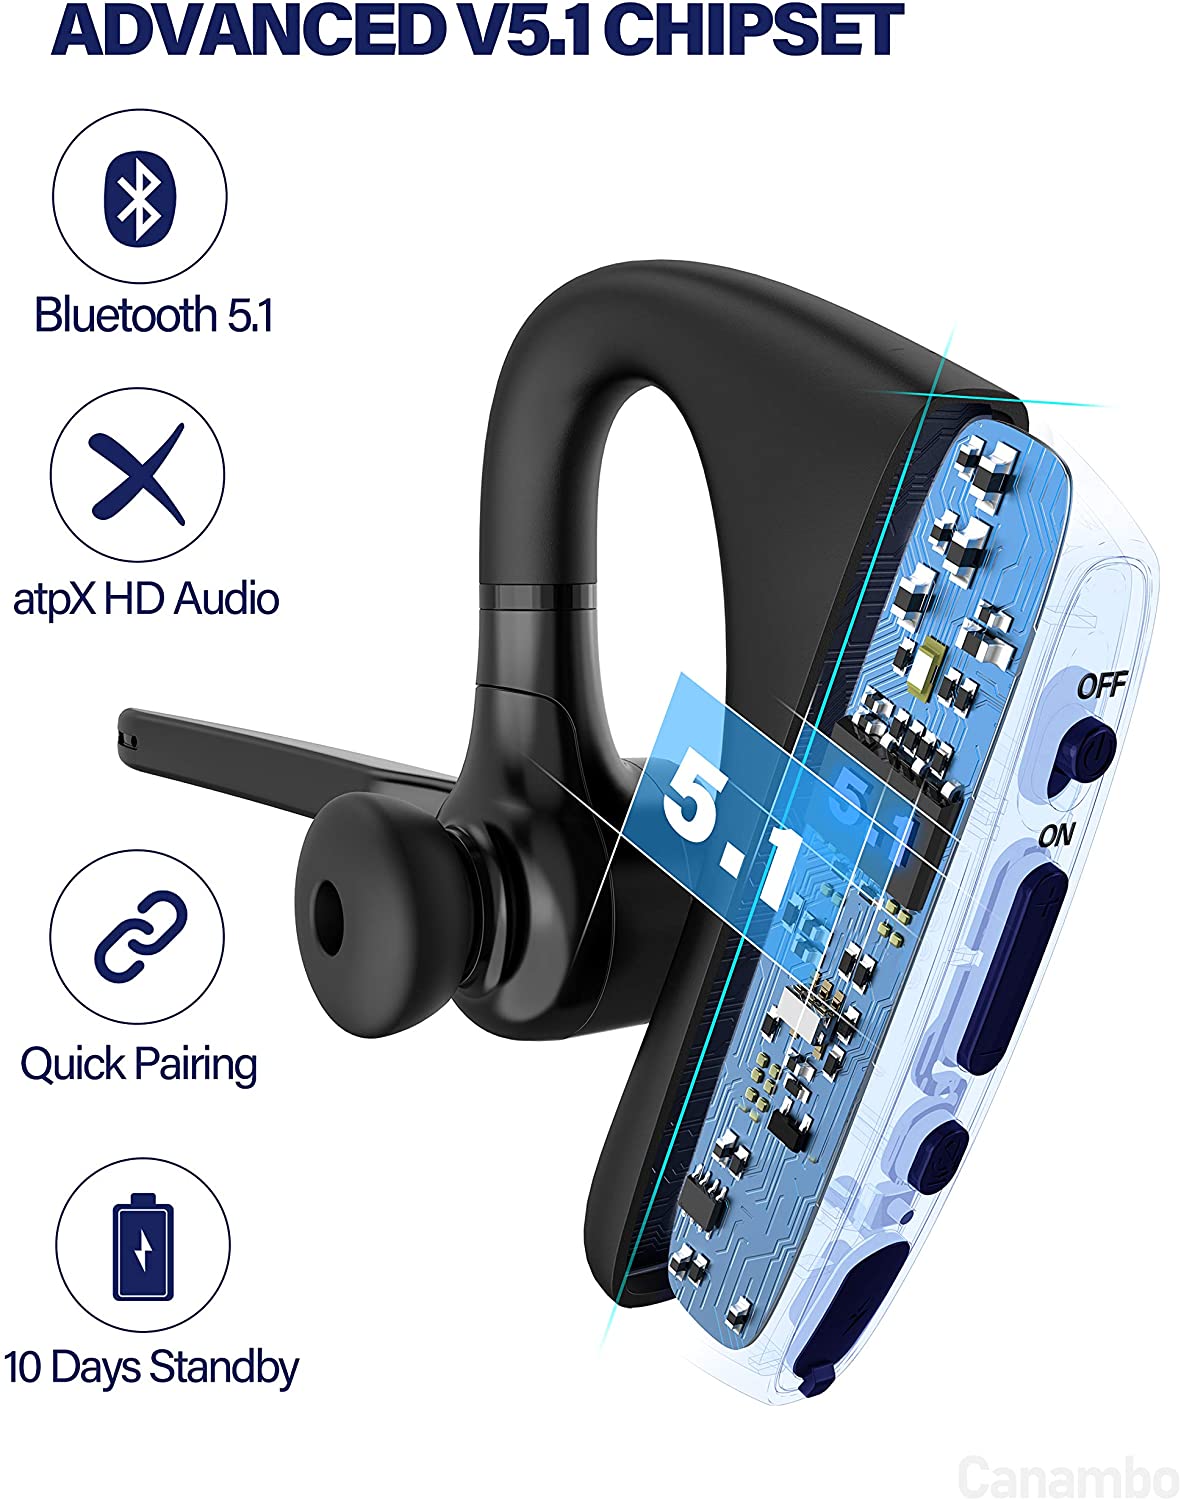 Bluetooth earpiece for handsfree use 